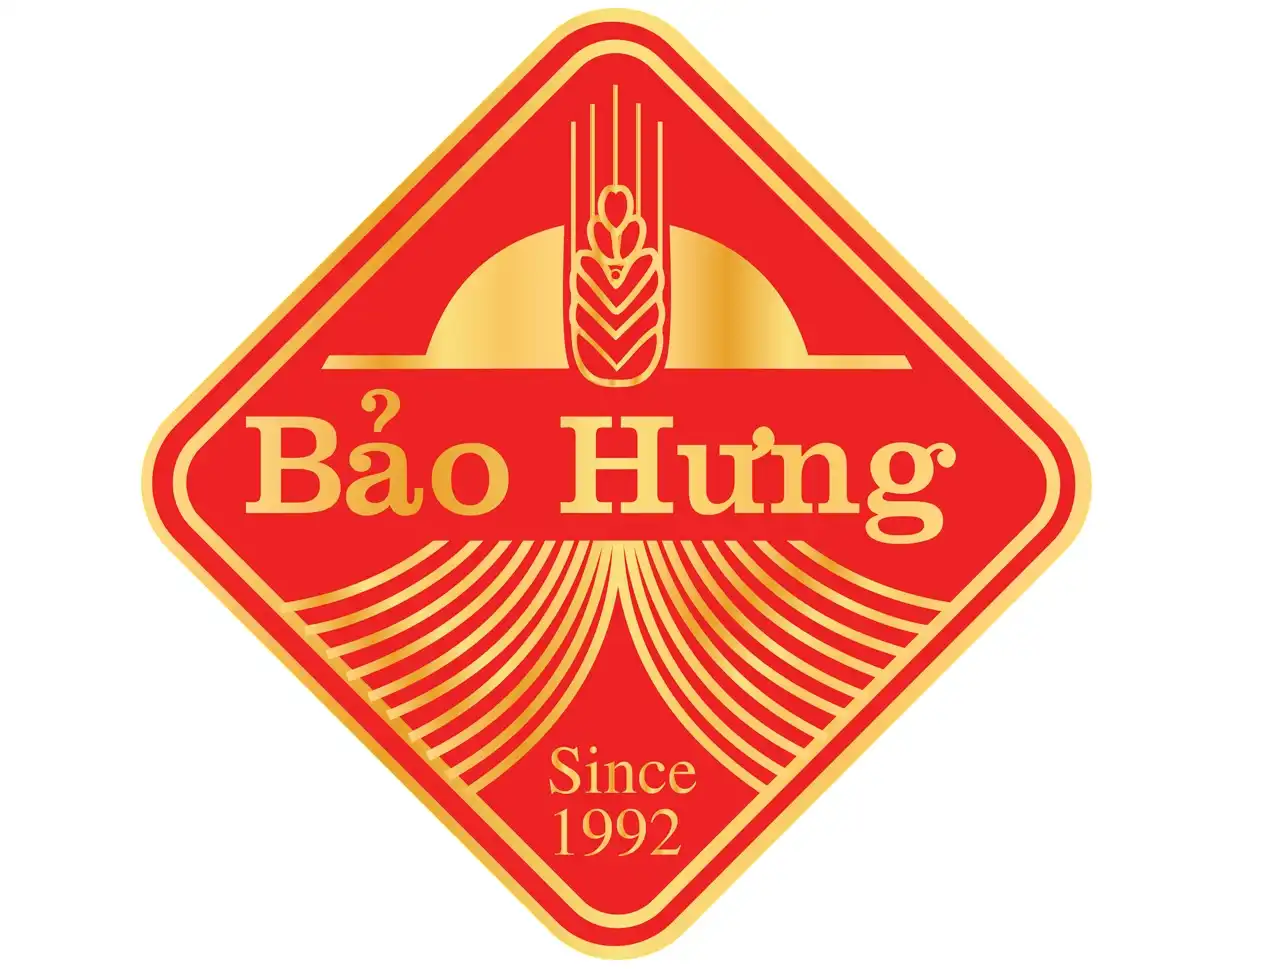 Bao hung